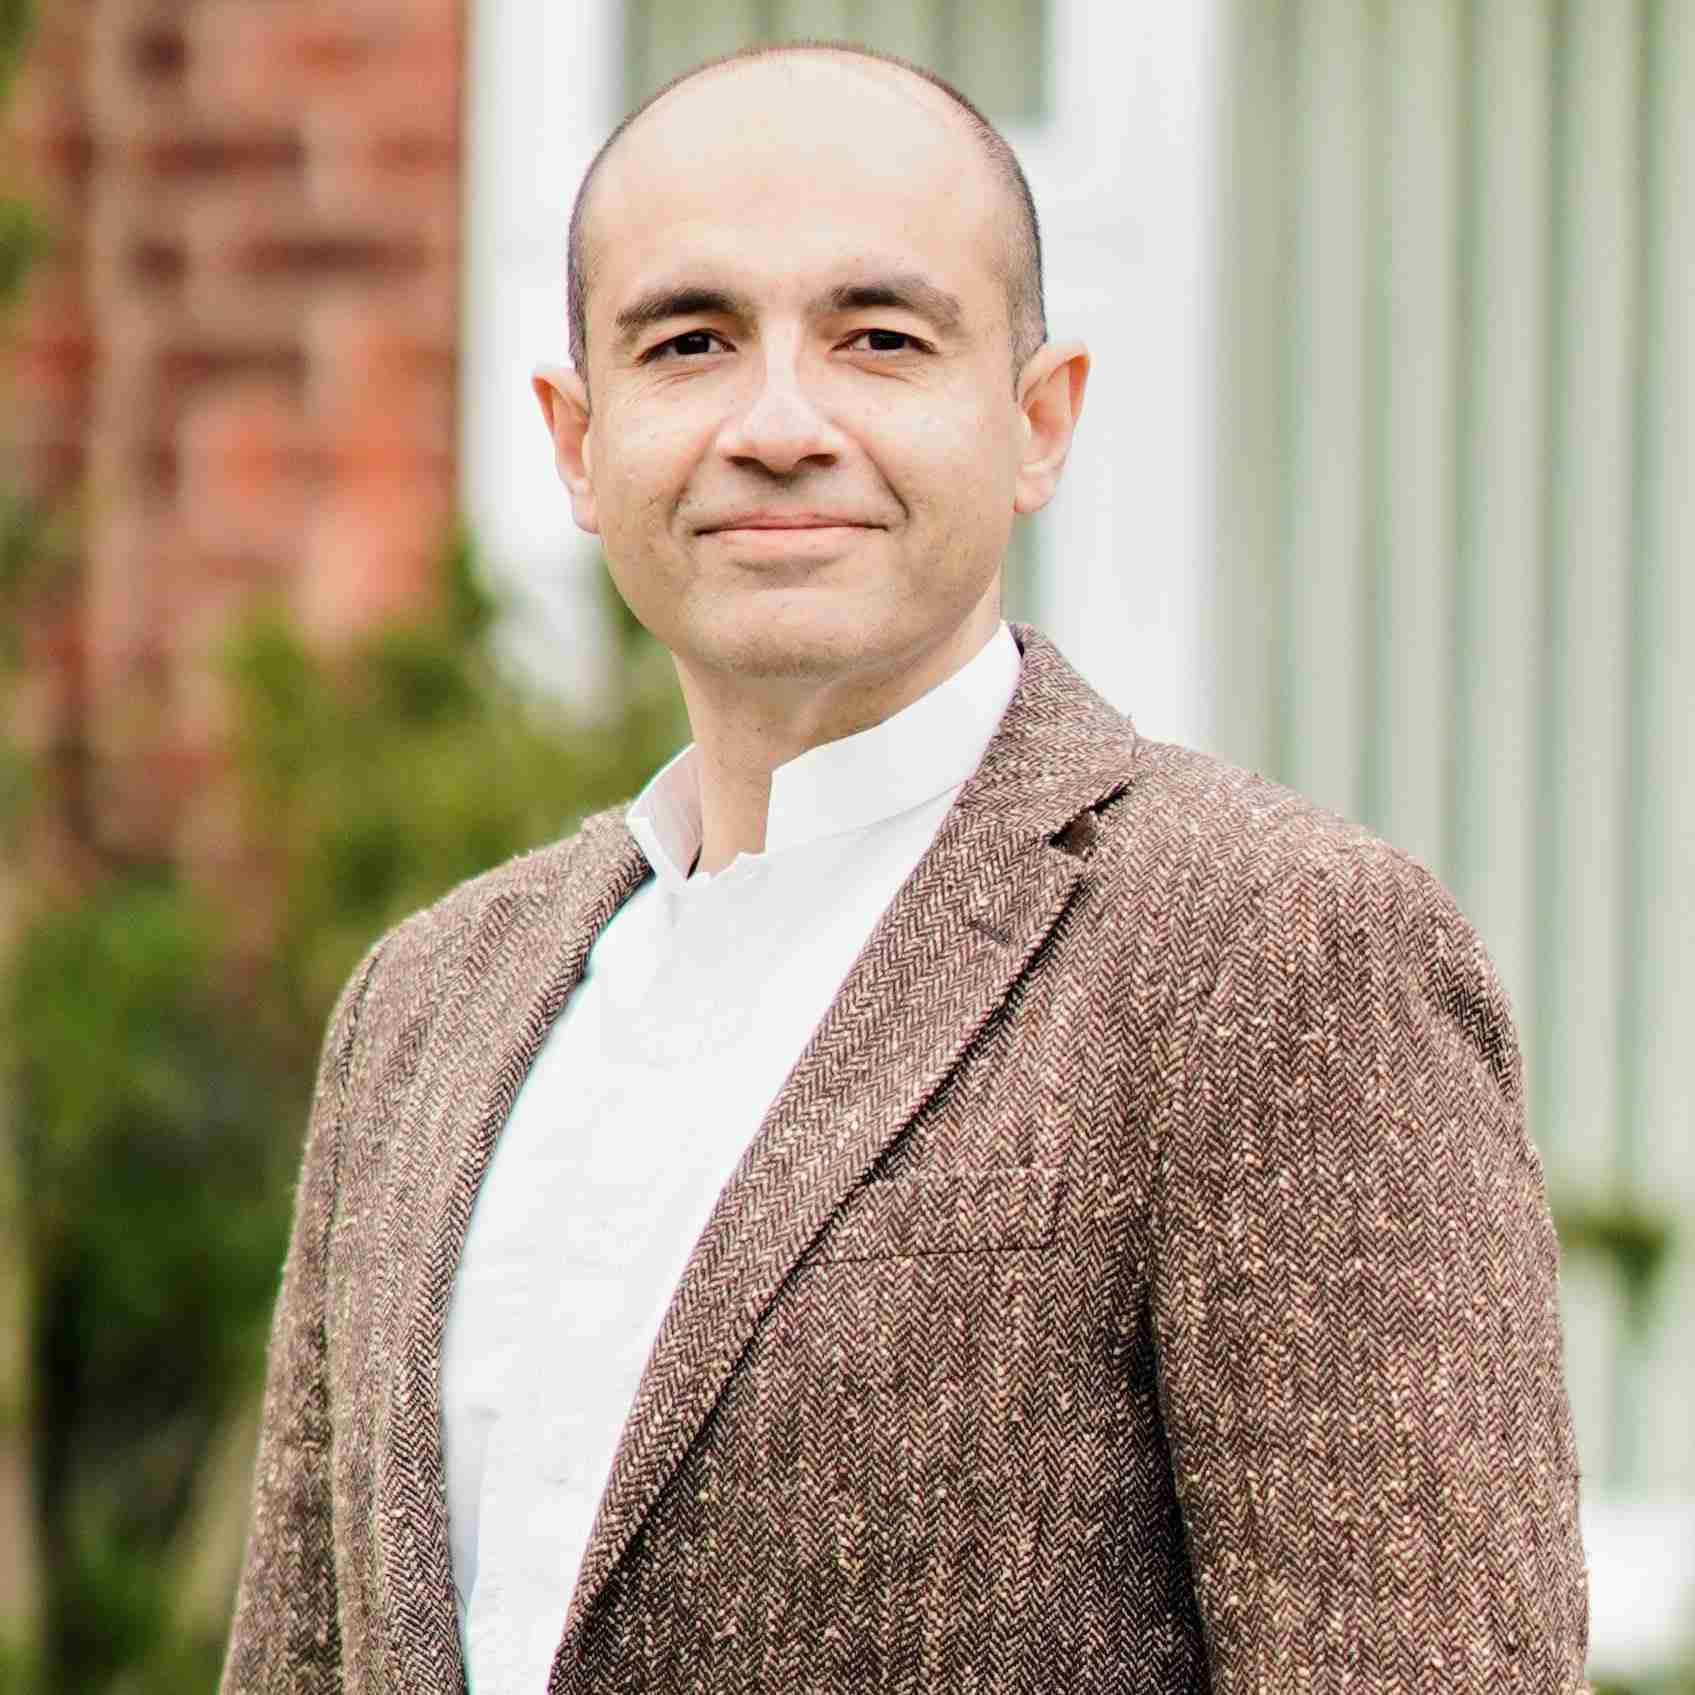 Profile image of Professor Adil Khan